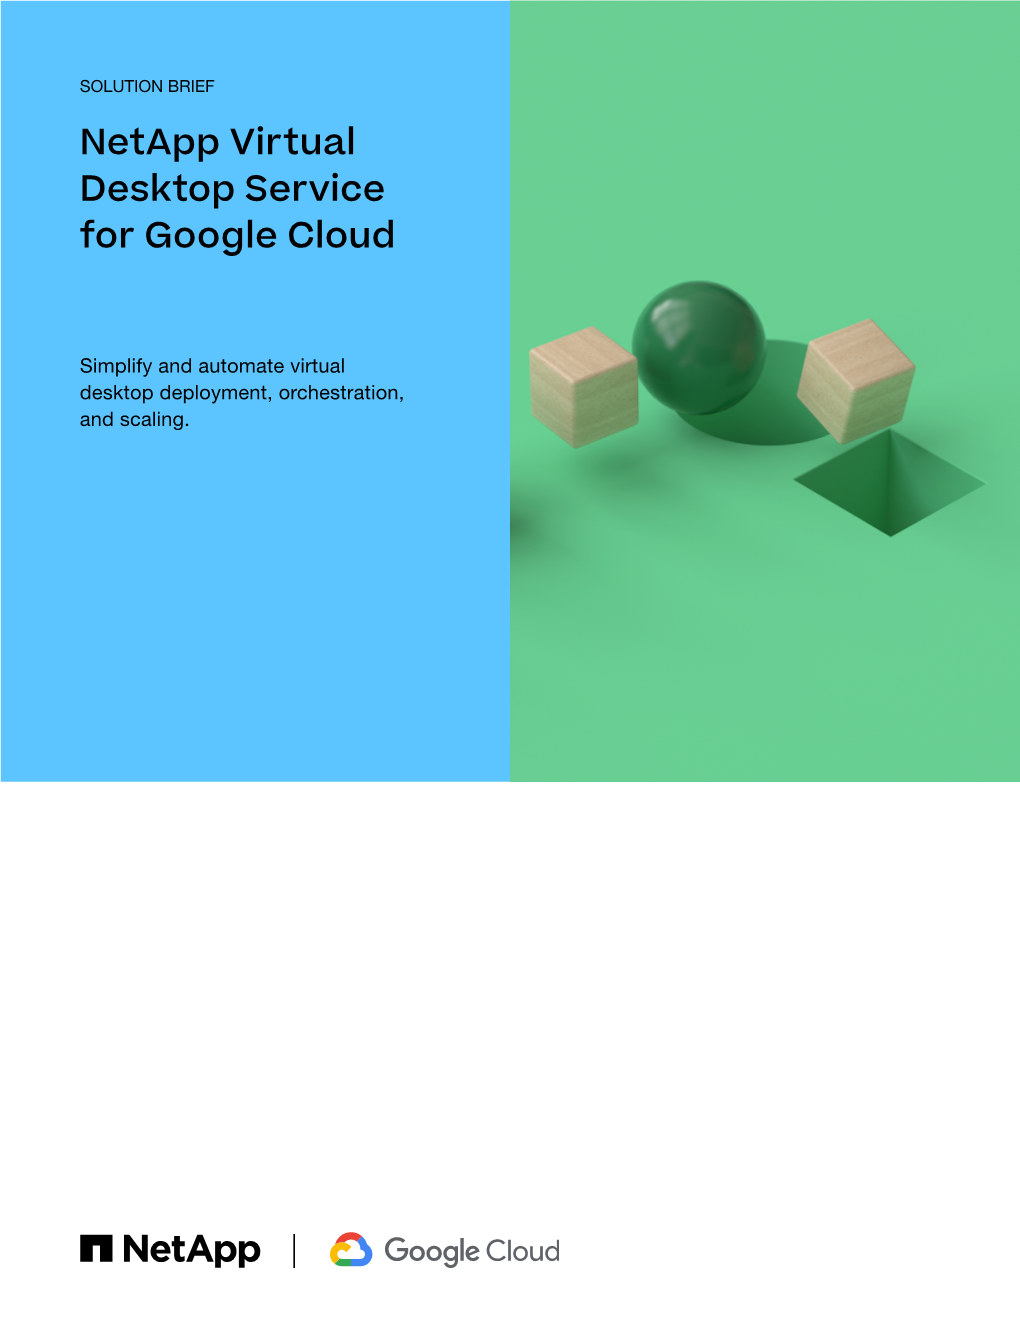 Netapp Virtual Desktop Service for Google Cloud